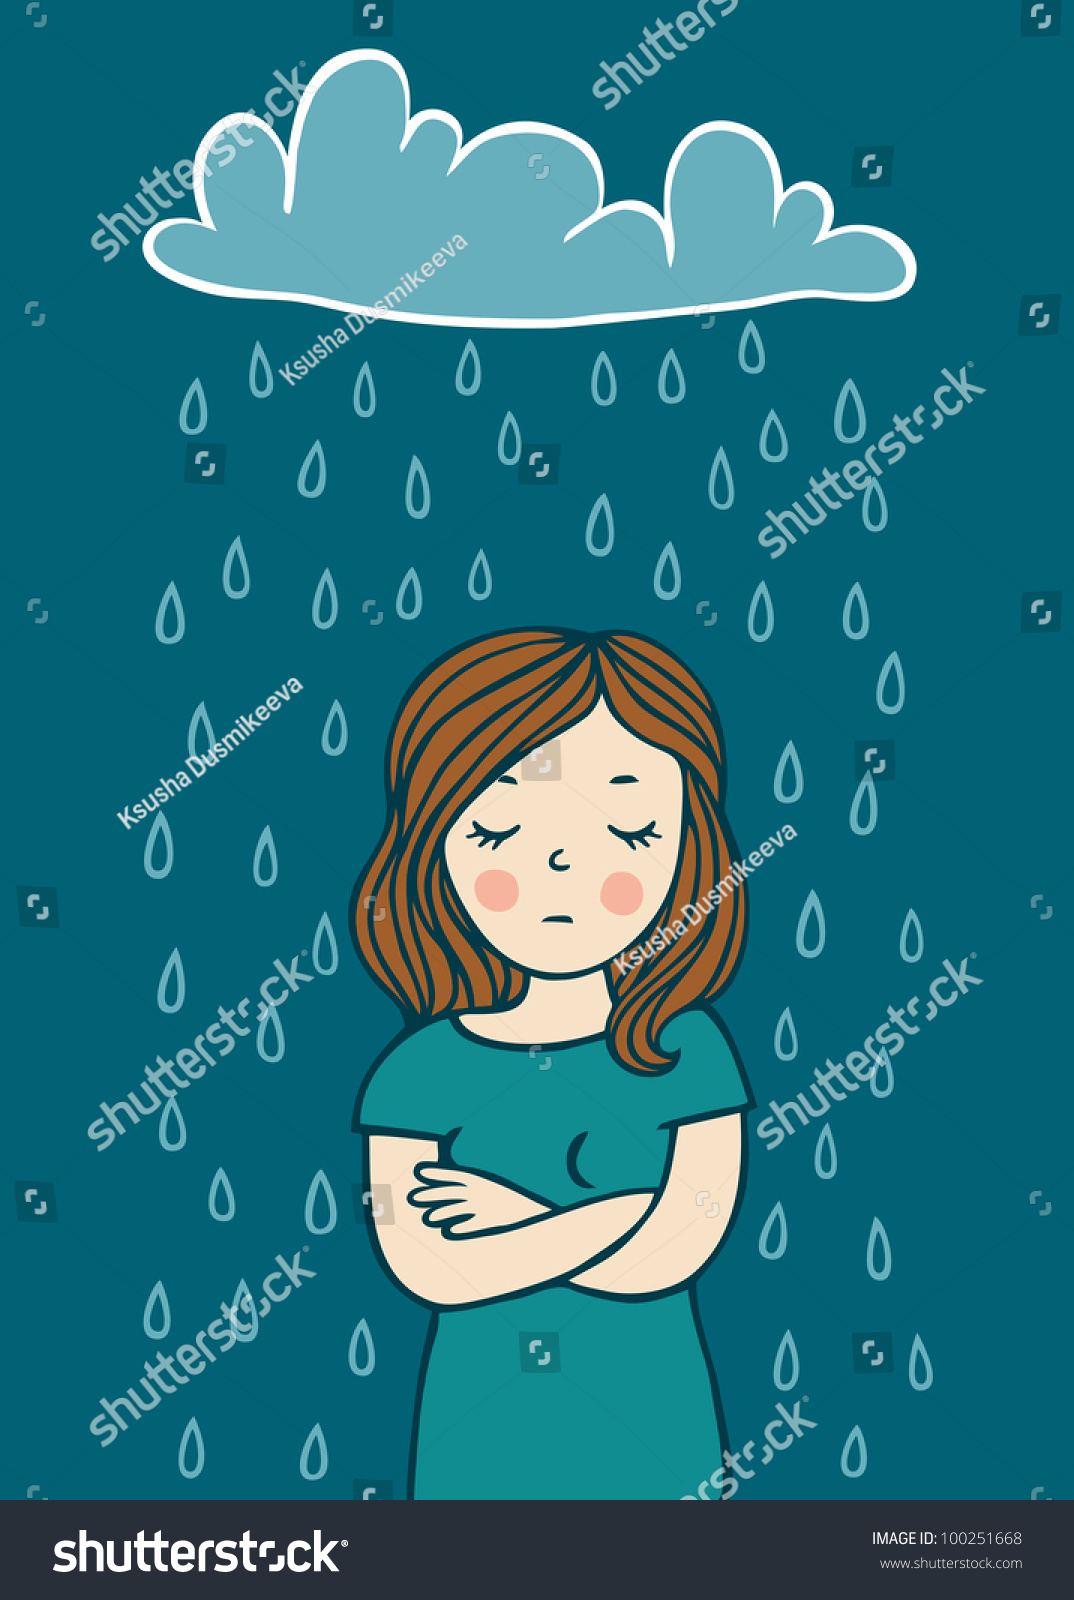 Girl In A Bad Mood Stock Vector Illustration 100251668 : Shutterstock